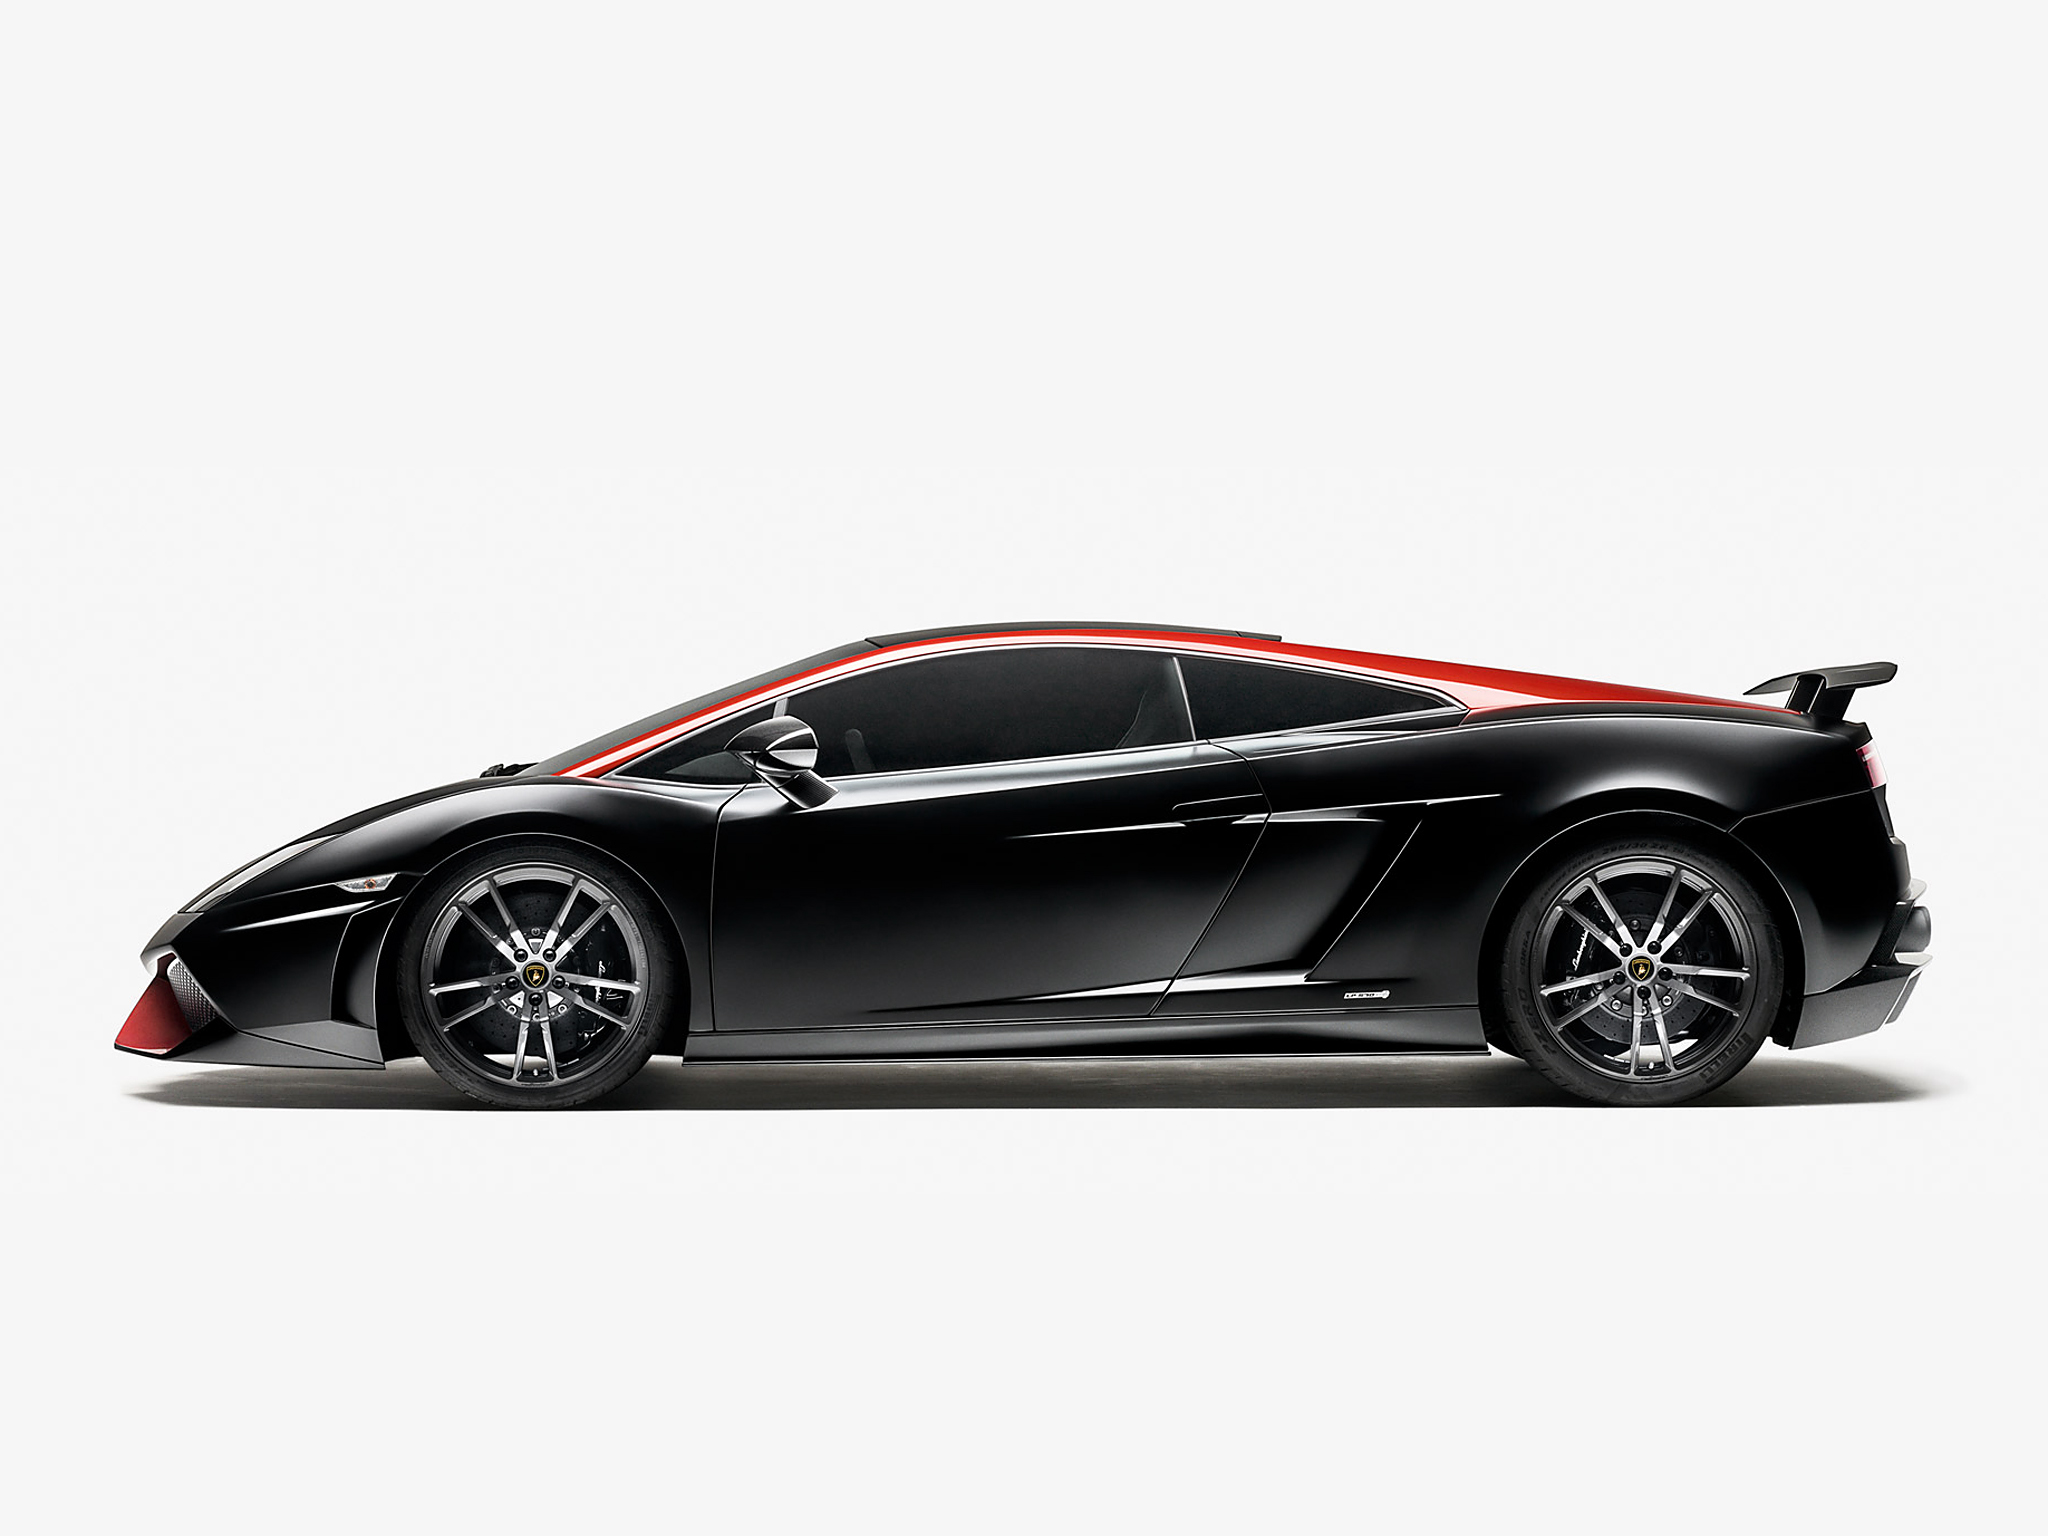 2012, Lamborghini, Gallardo, Lp570 4, Superleggera, Edizione, Tecnica,  Supercar, Supercars, Fe Wallpapers HD / Desktop and Mobile Backgrounds